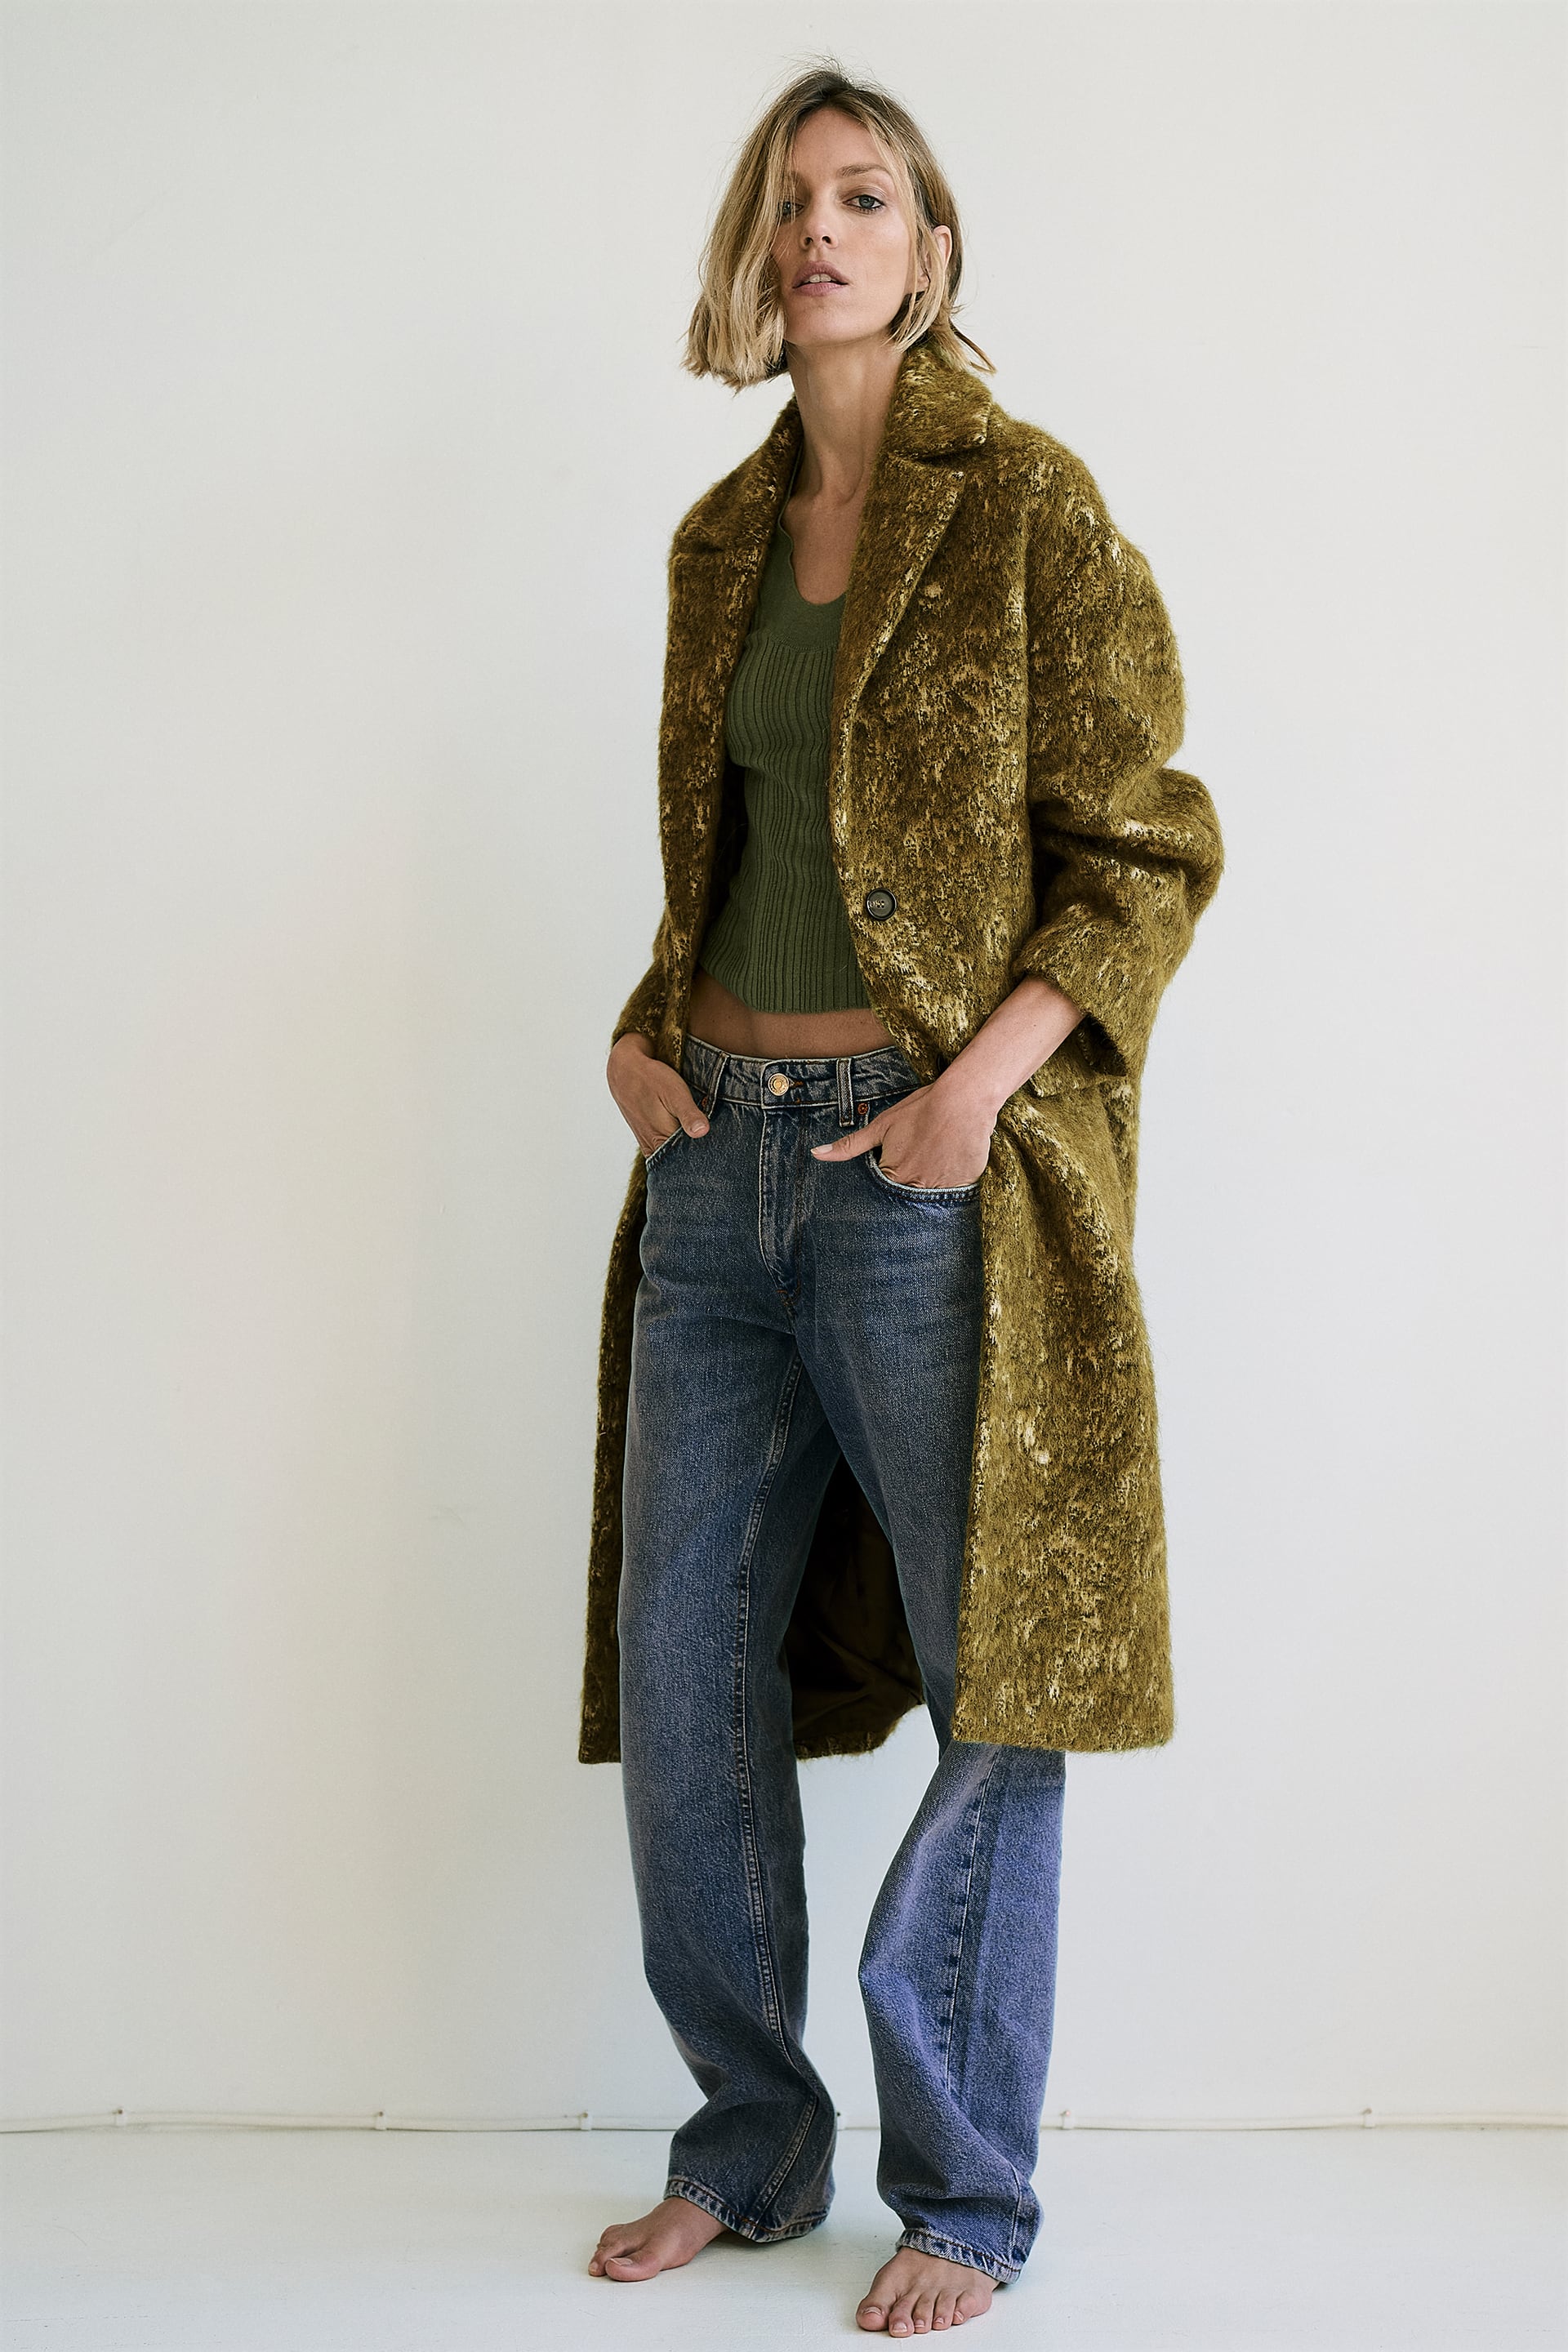 Zara Jacquard Coat Limited Edition